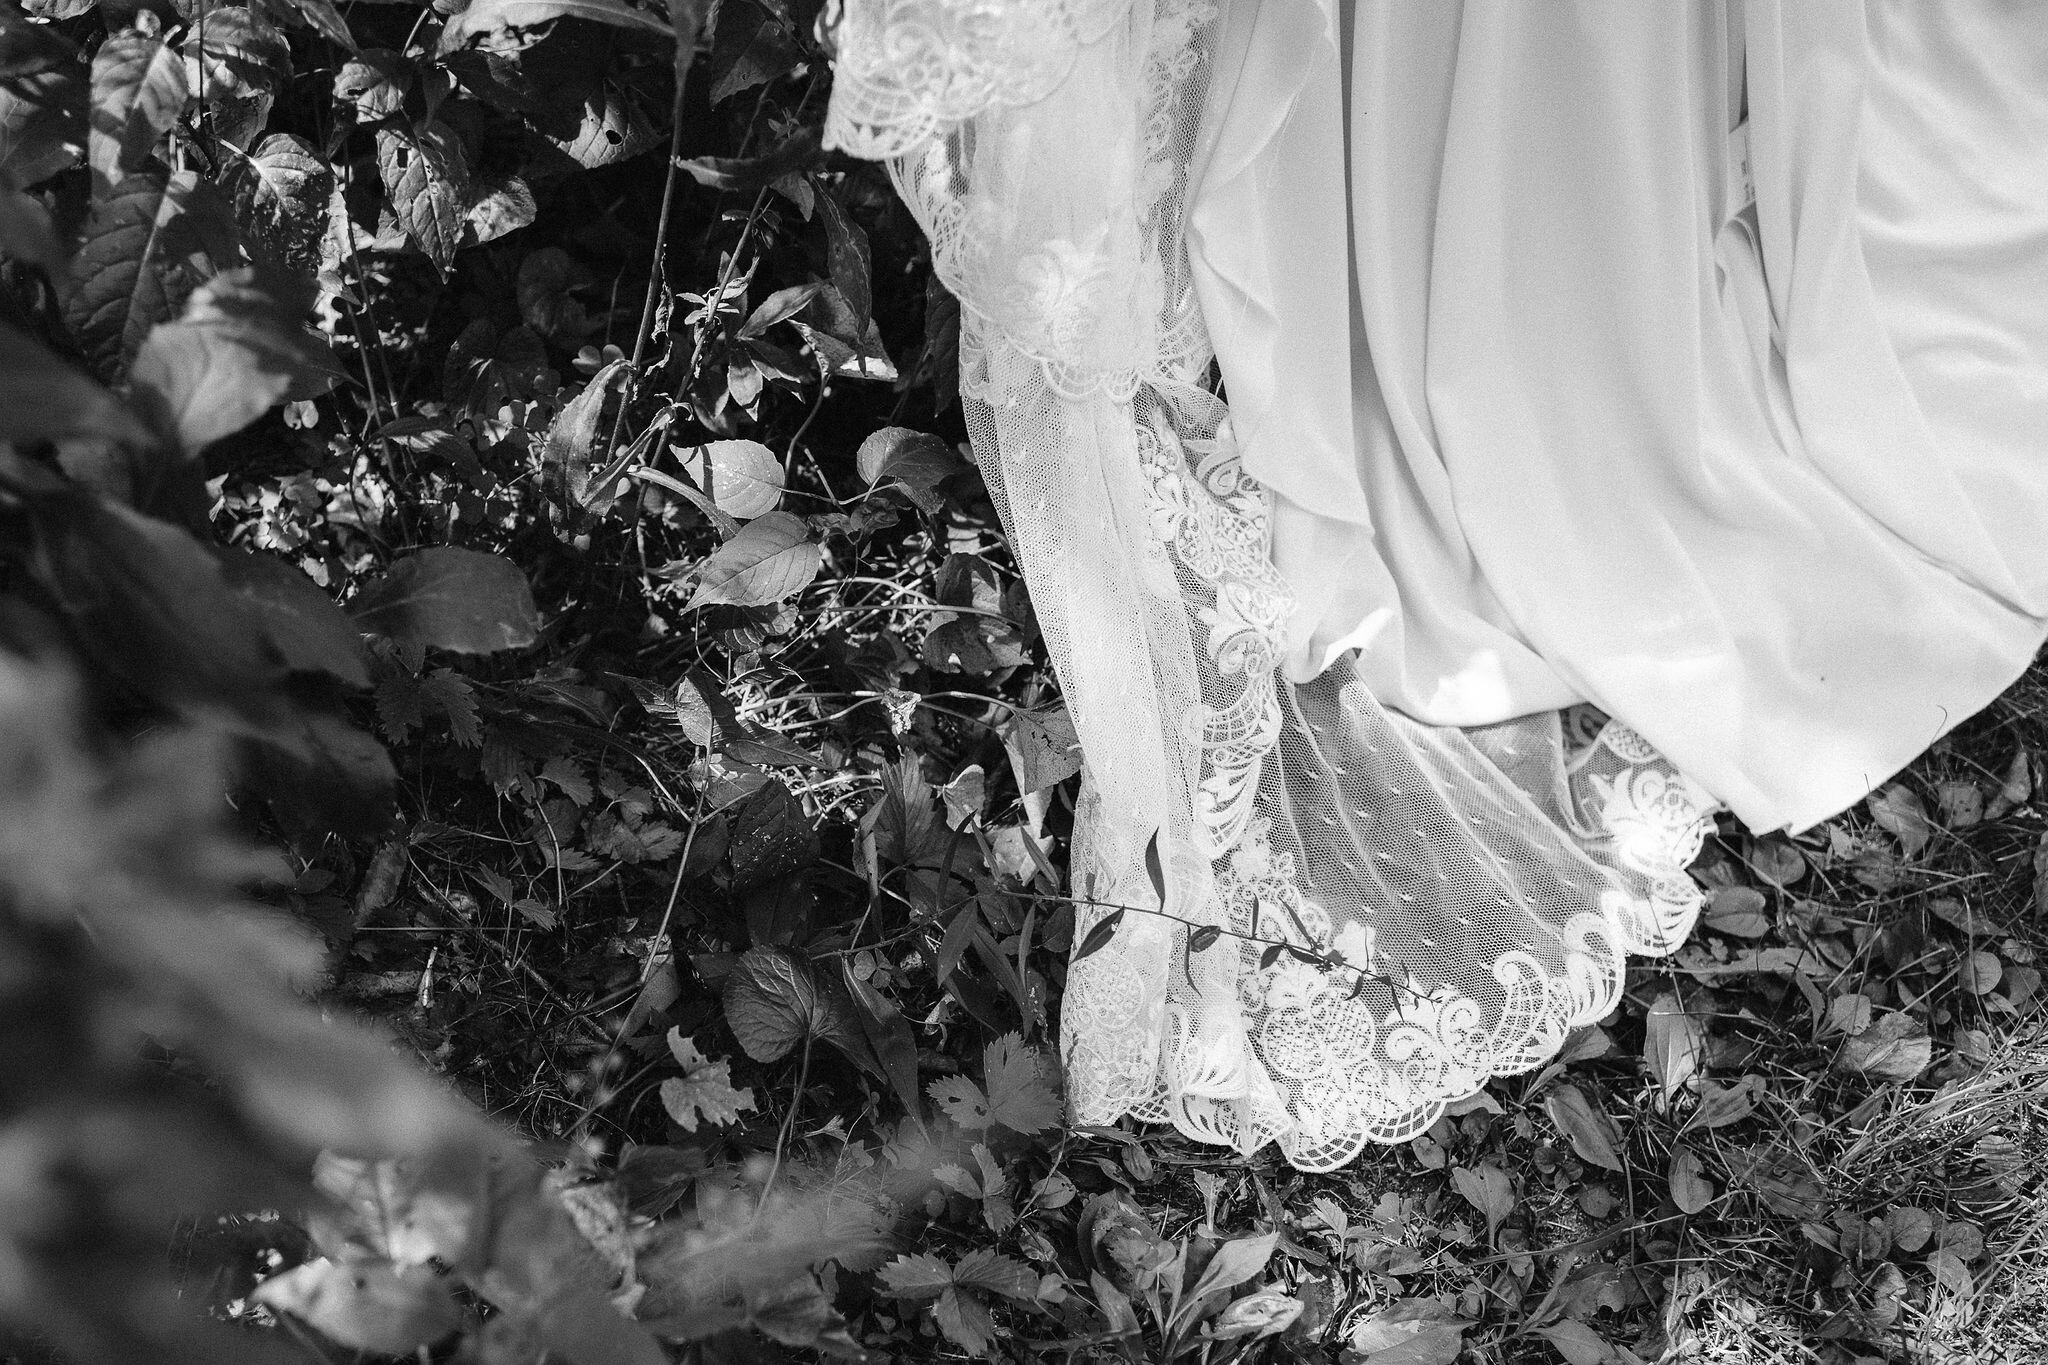 Bottom of wedding dress in the leaves